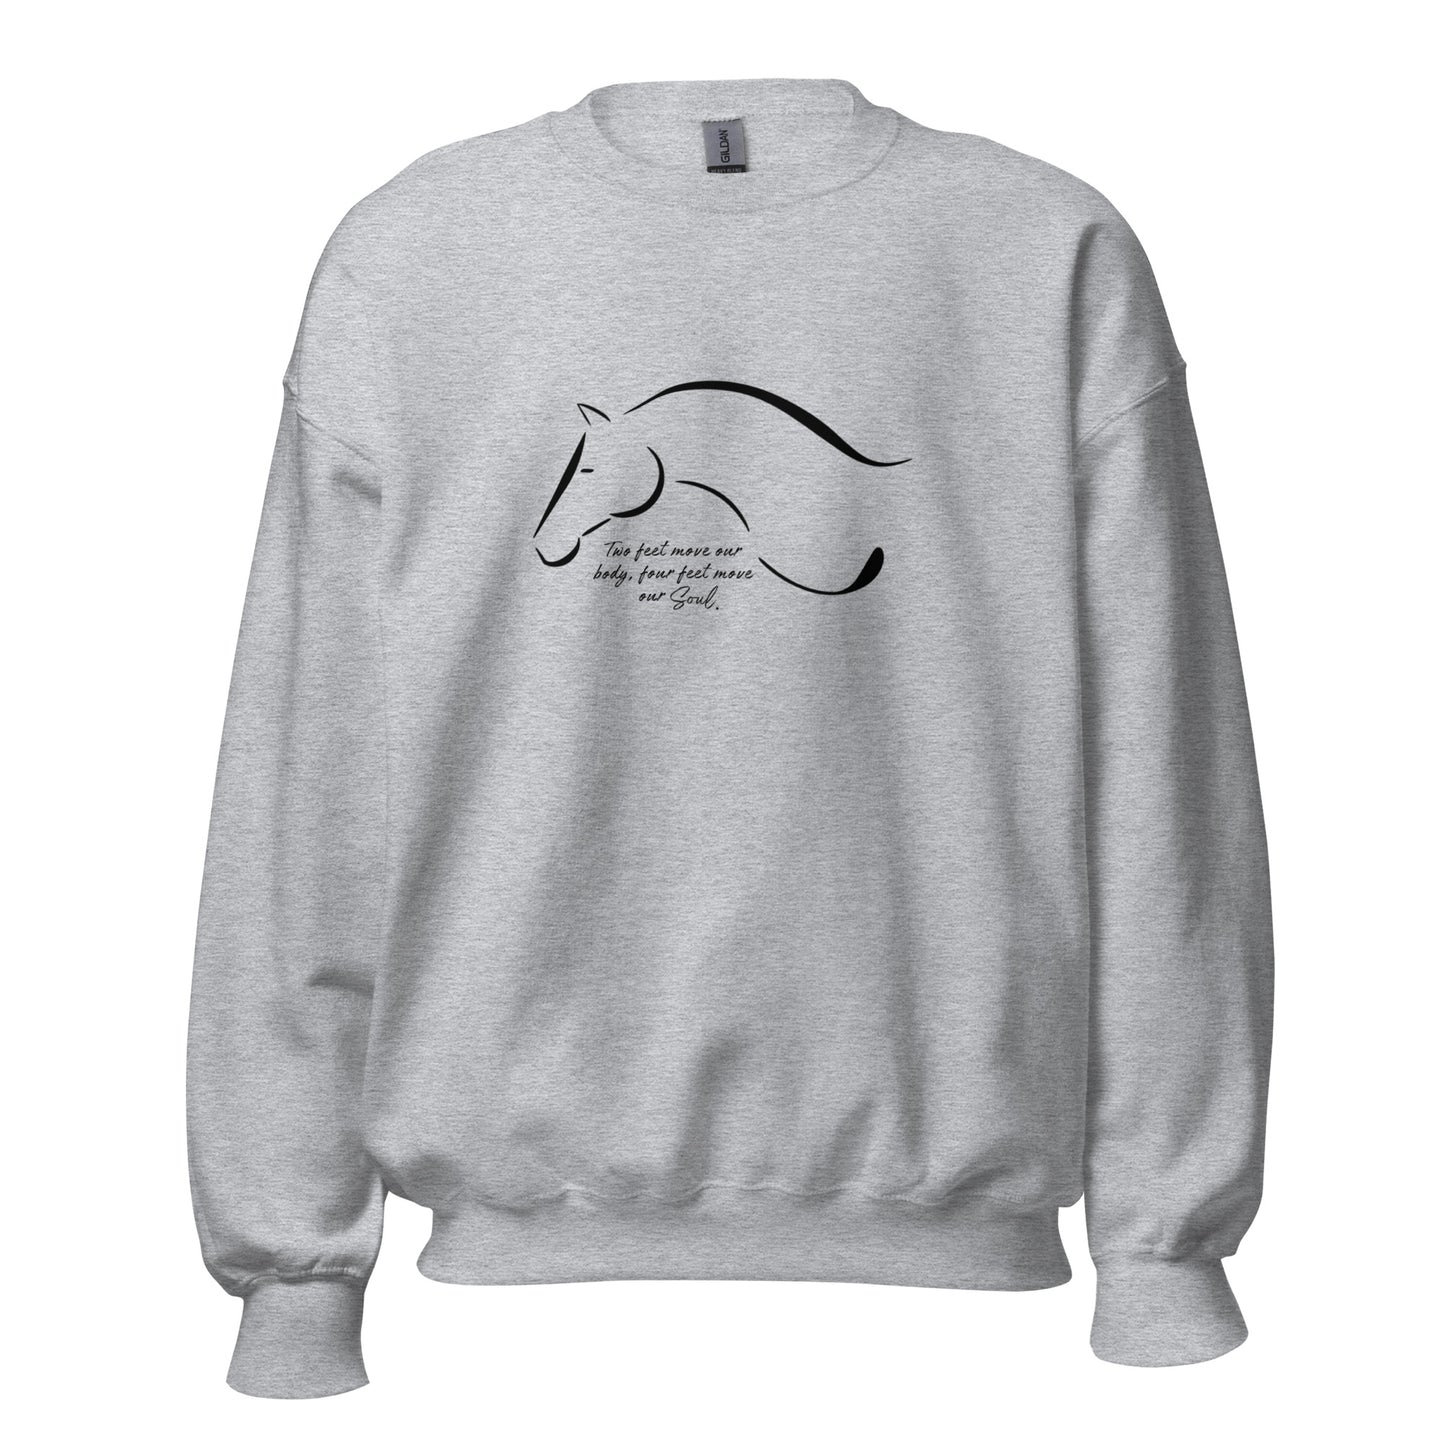 Soul - Equestrian sweatshirt